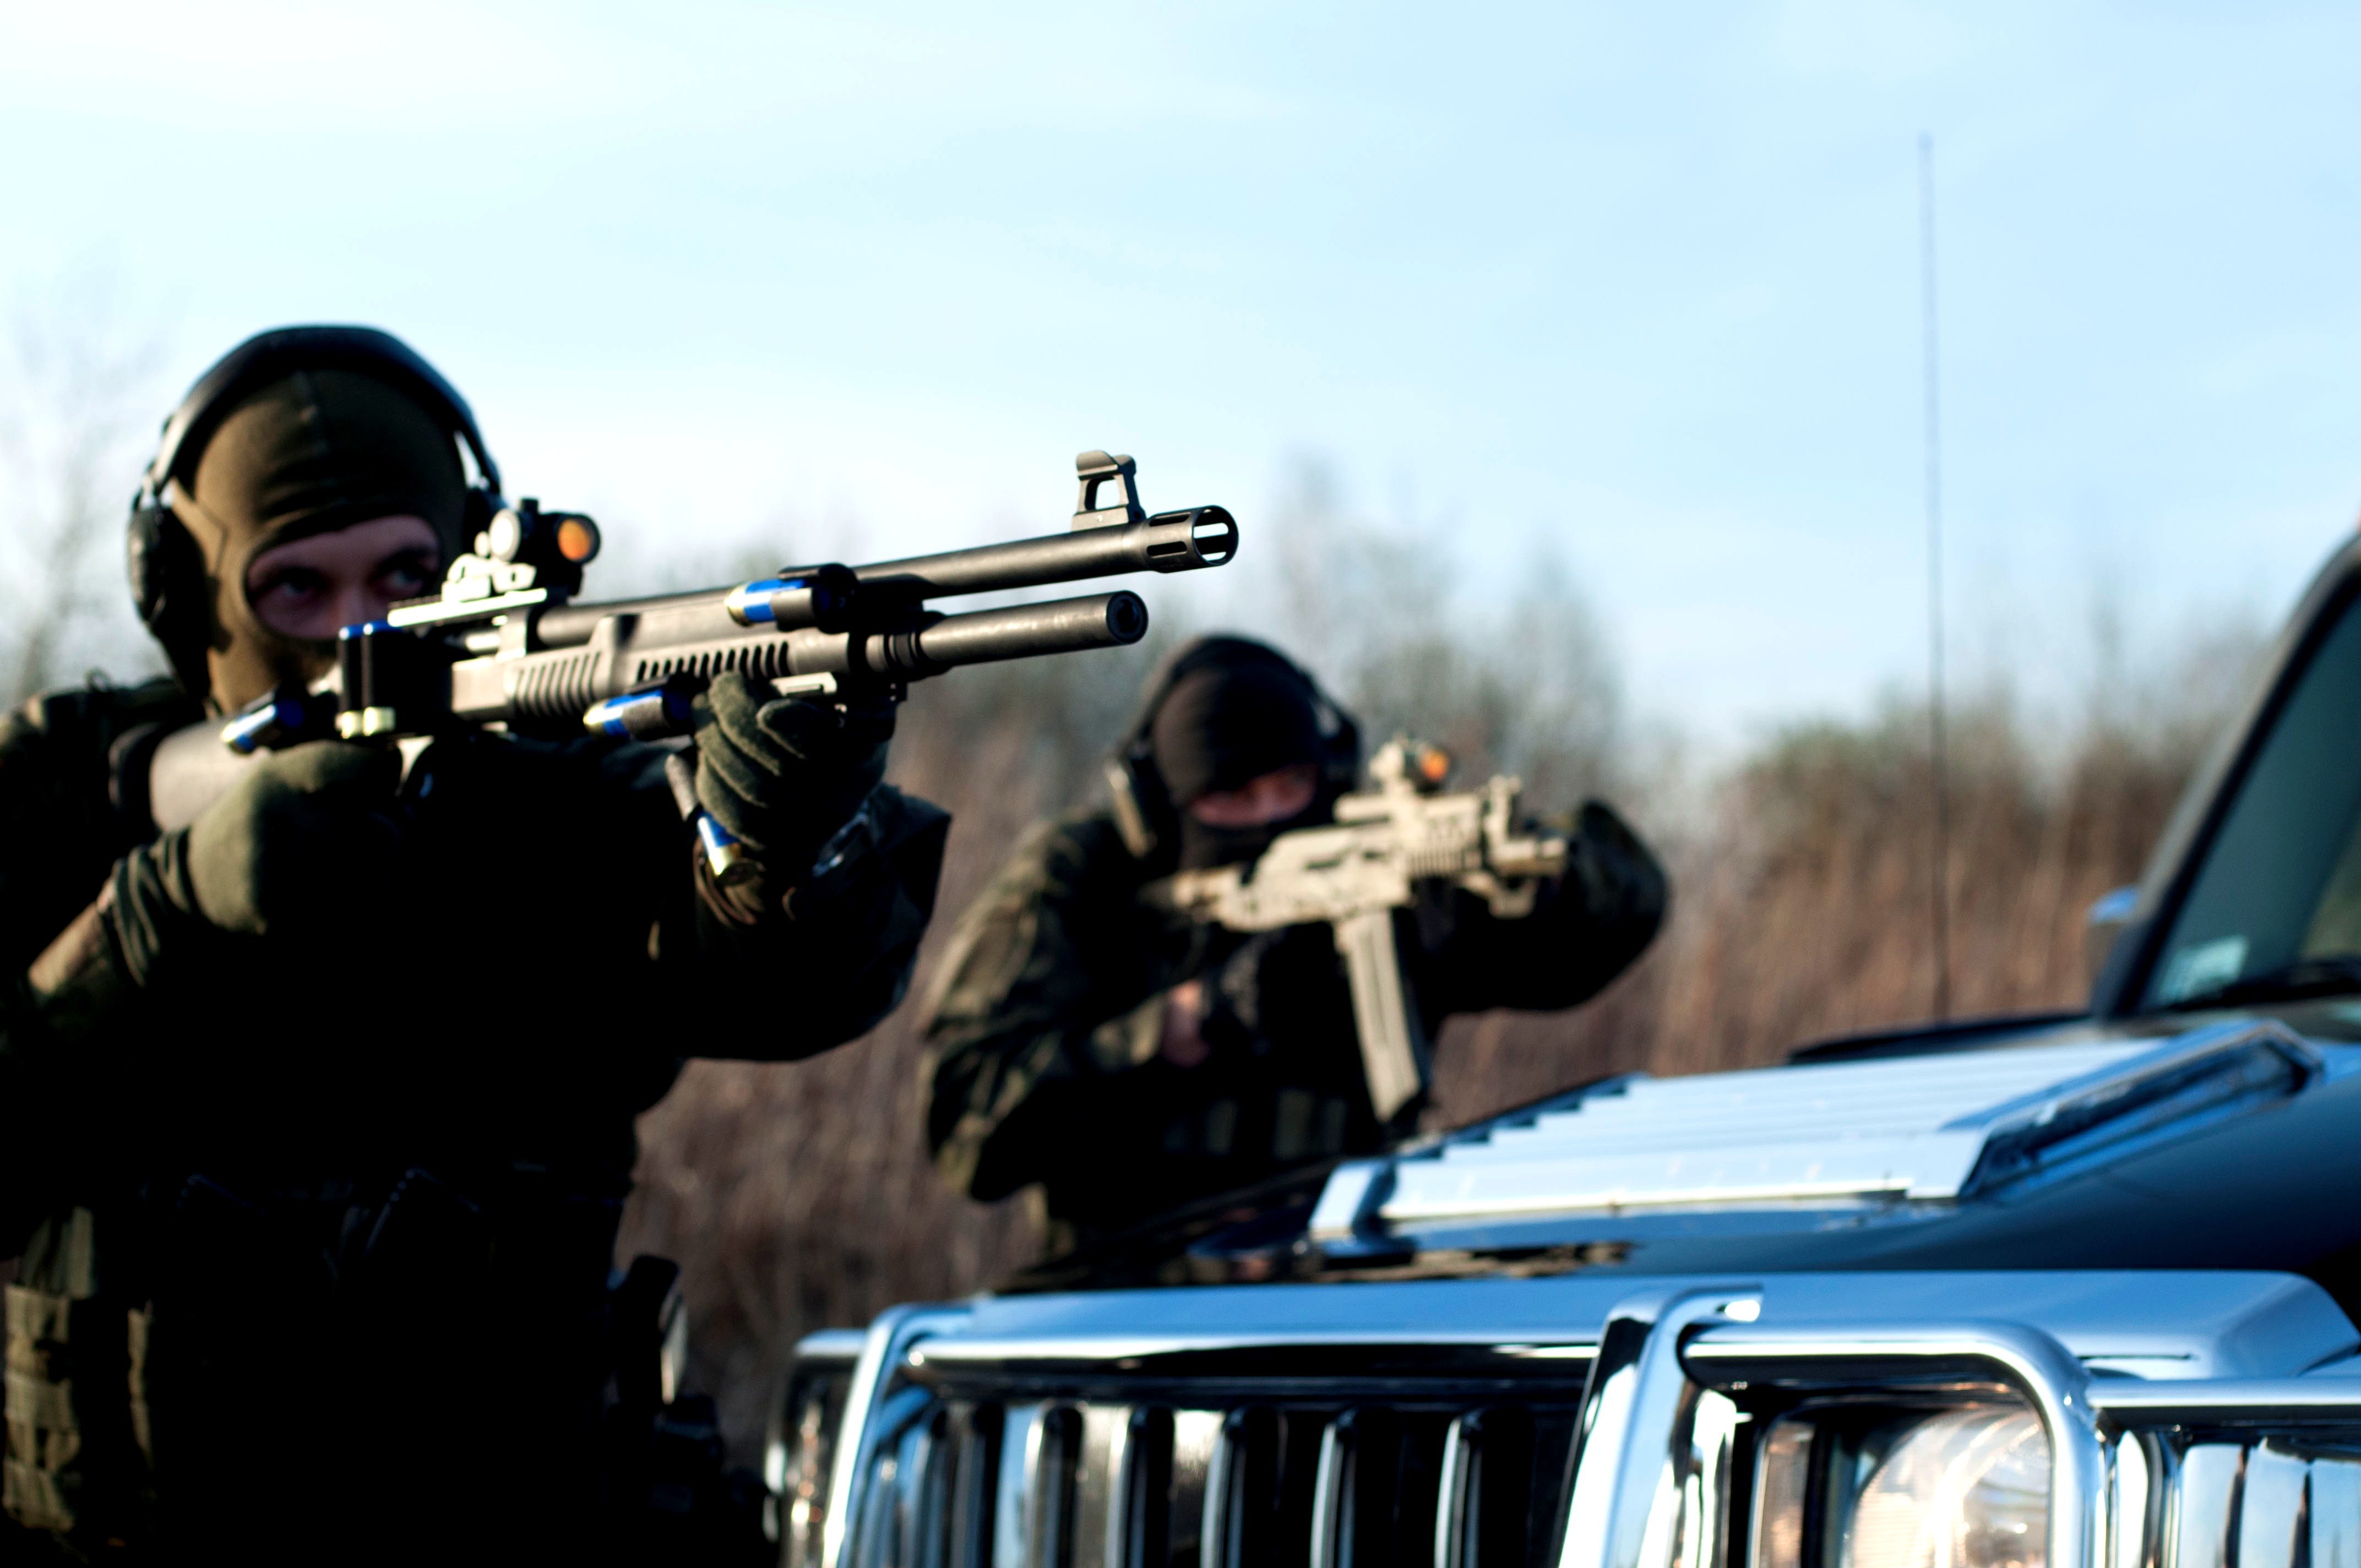 Warsztaty strzeleckie Vehicle shooting tactics ArmTac